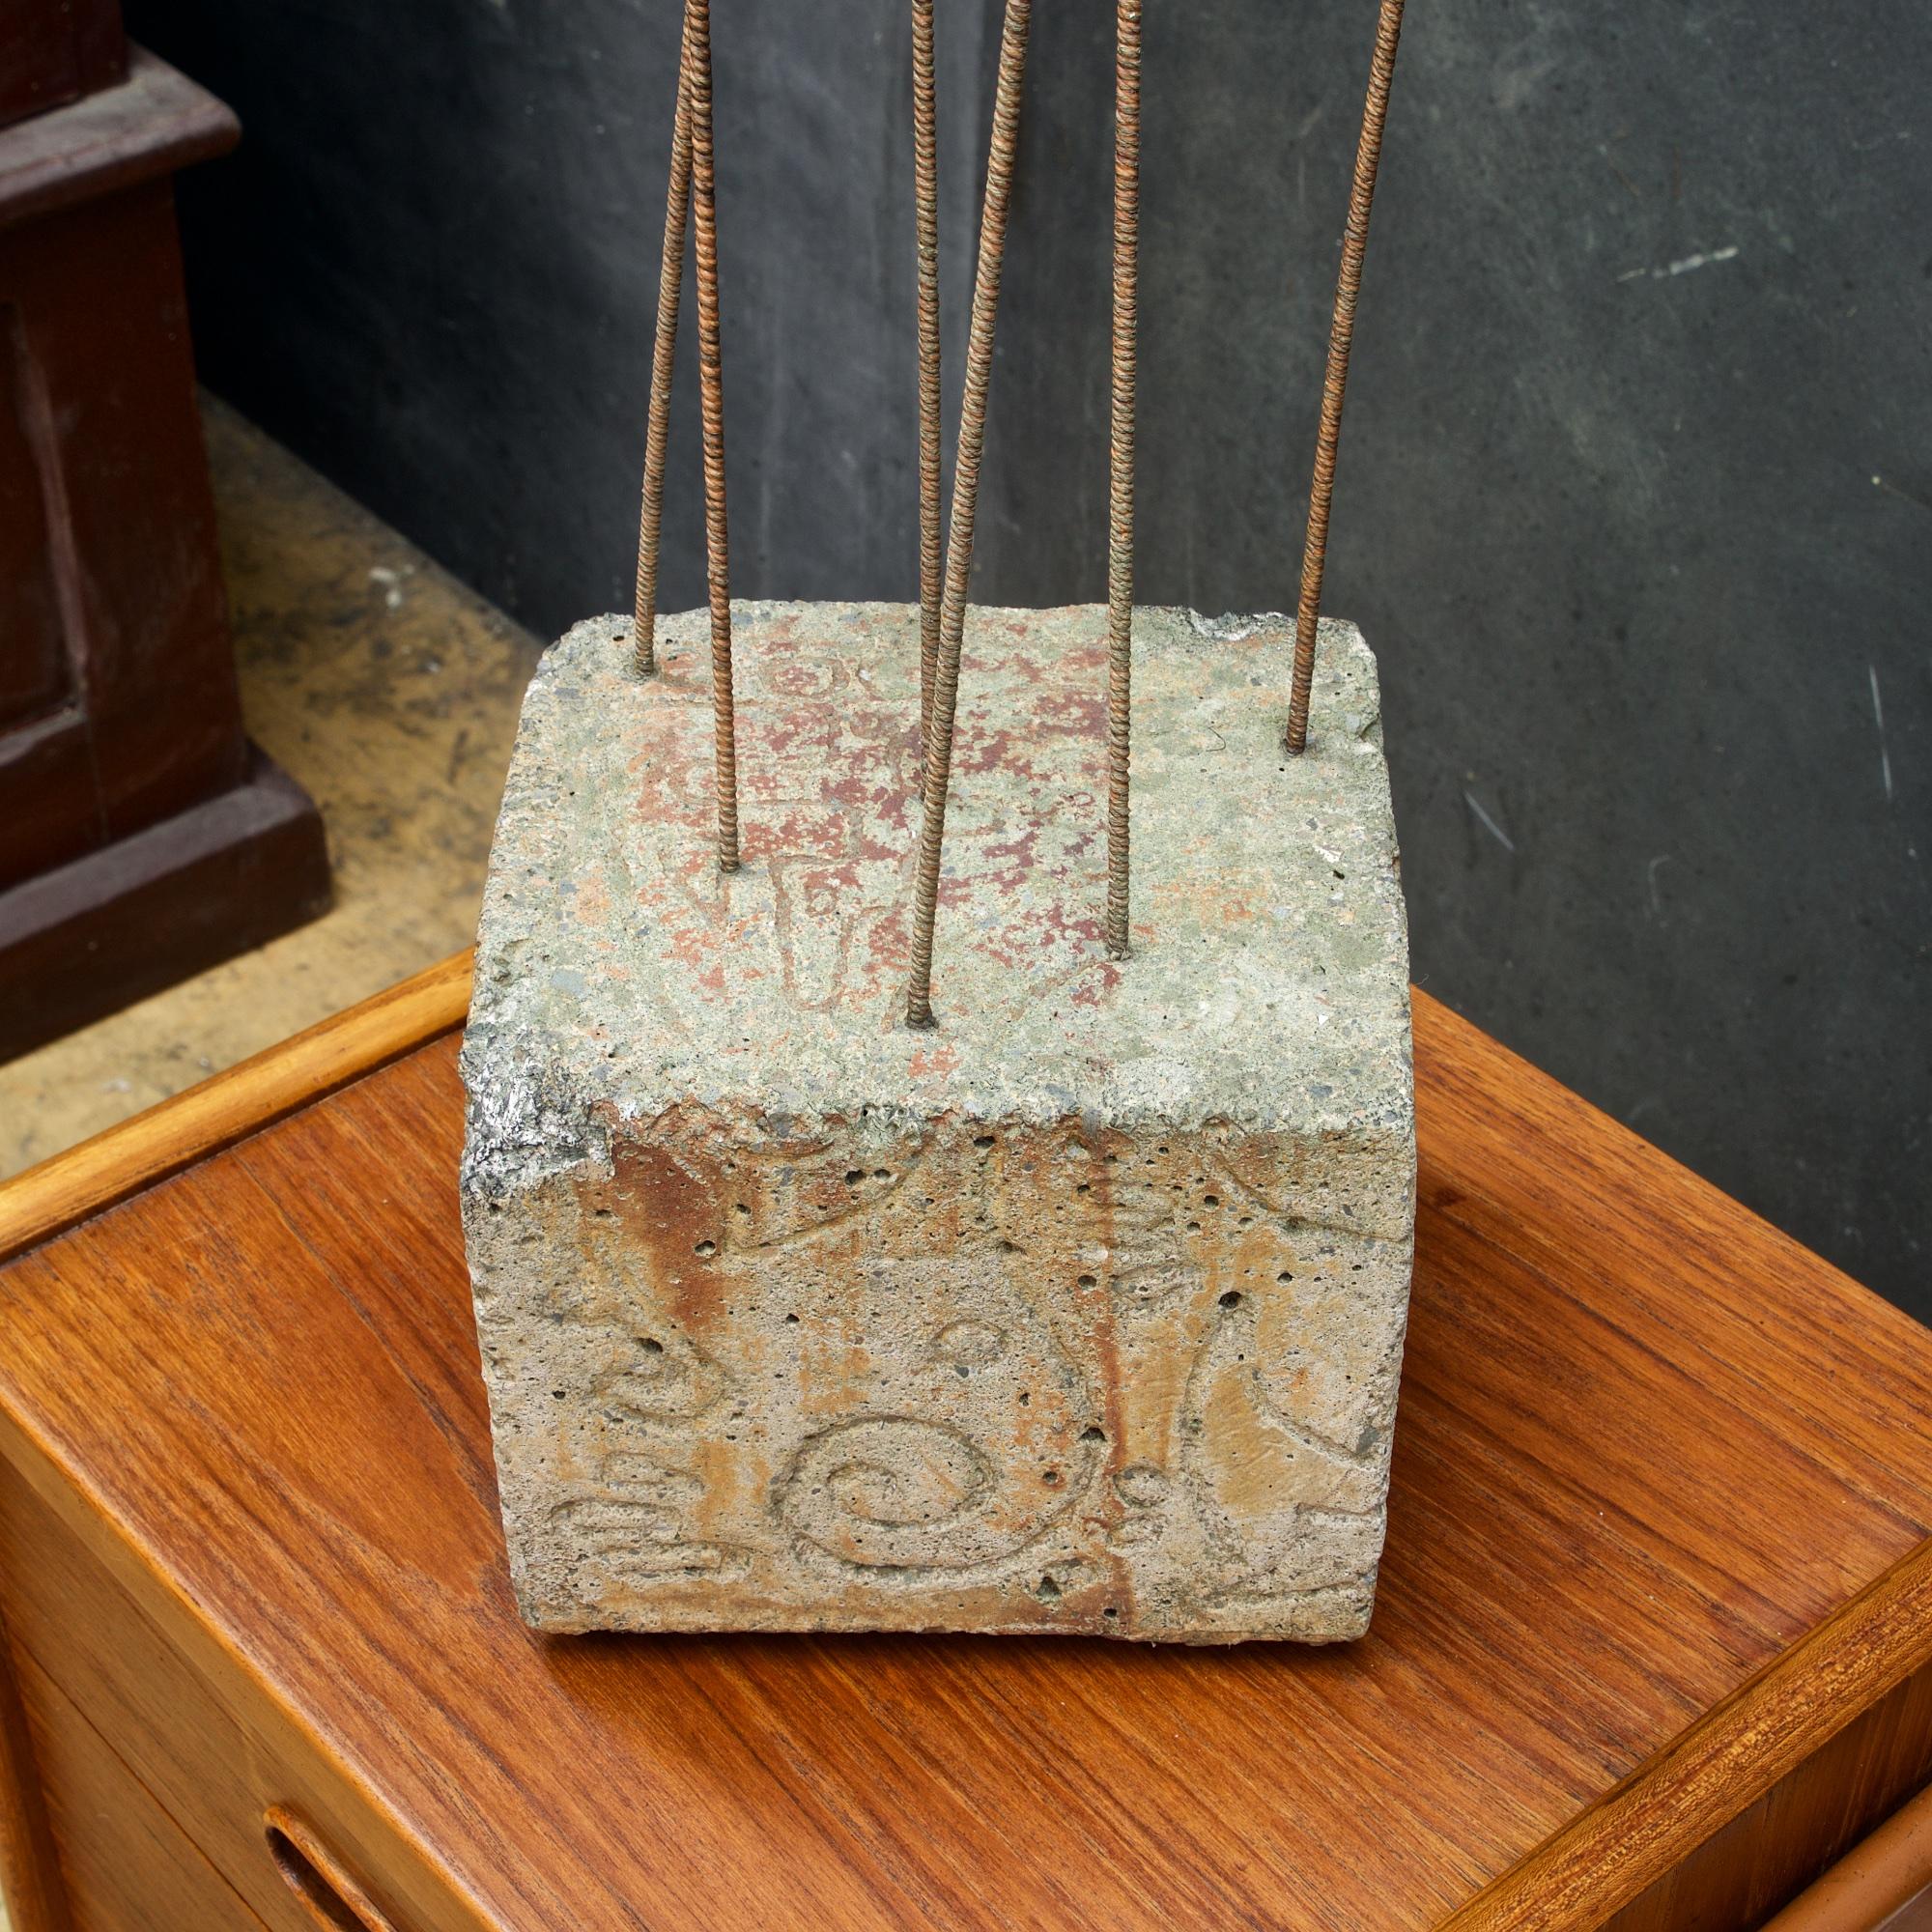 Hand-Crafted Kinetic Reeds Sculpture Incised Concrete Base Vintage 1950s Studio Craft For Sale